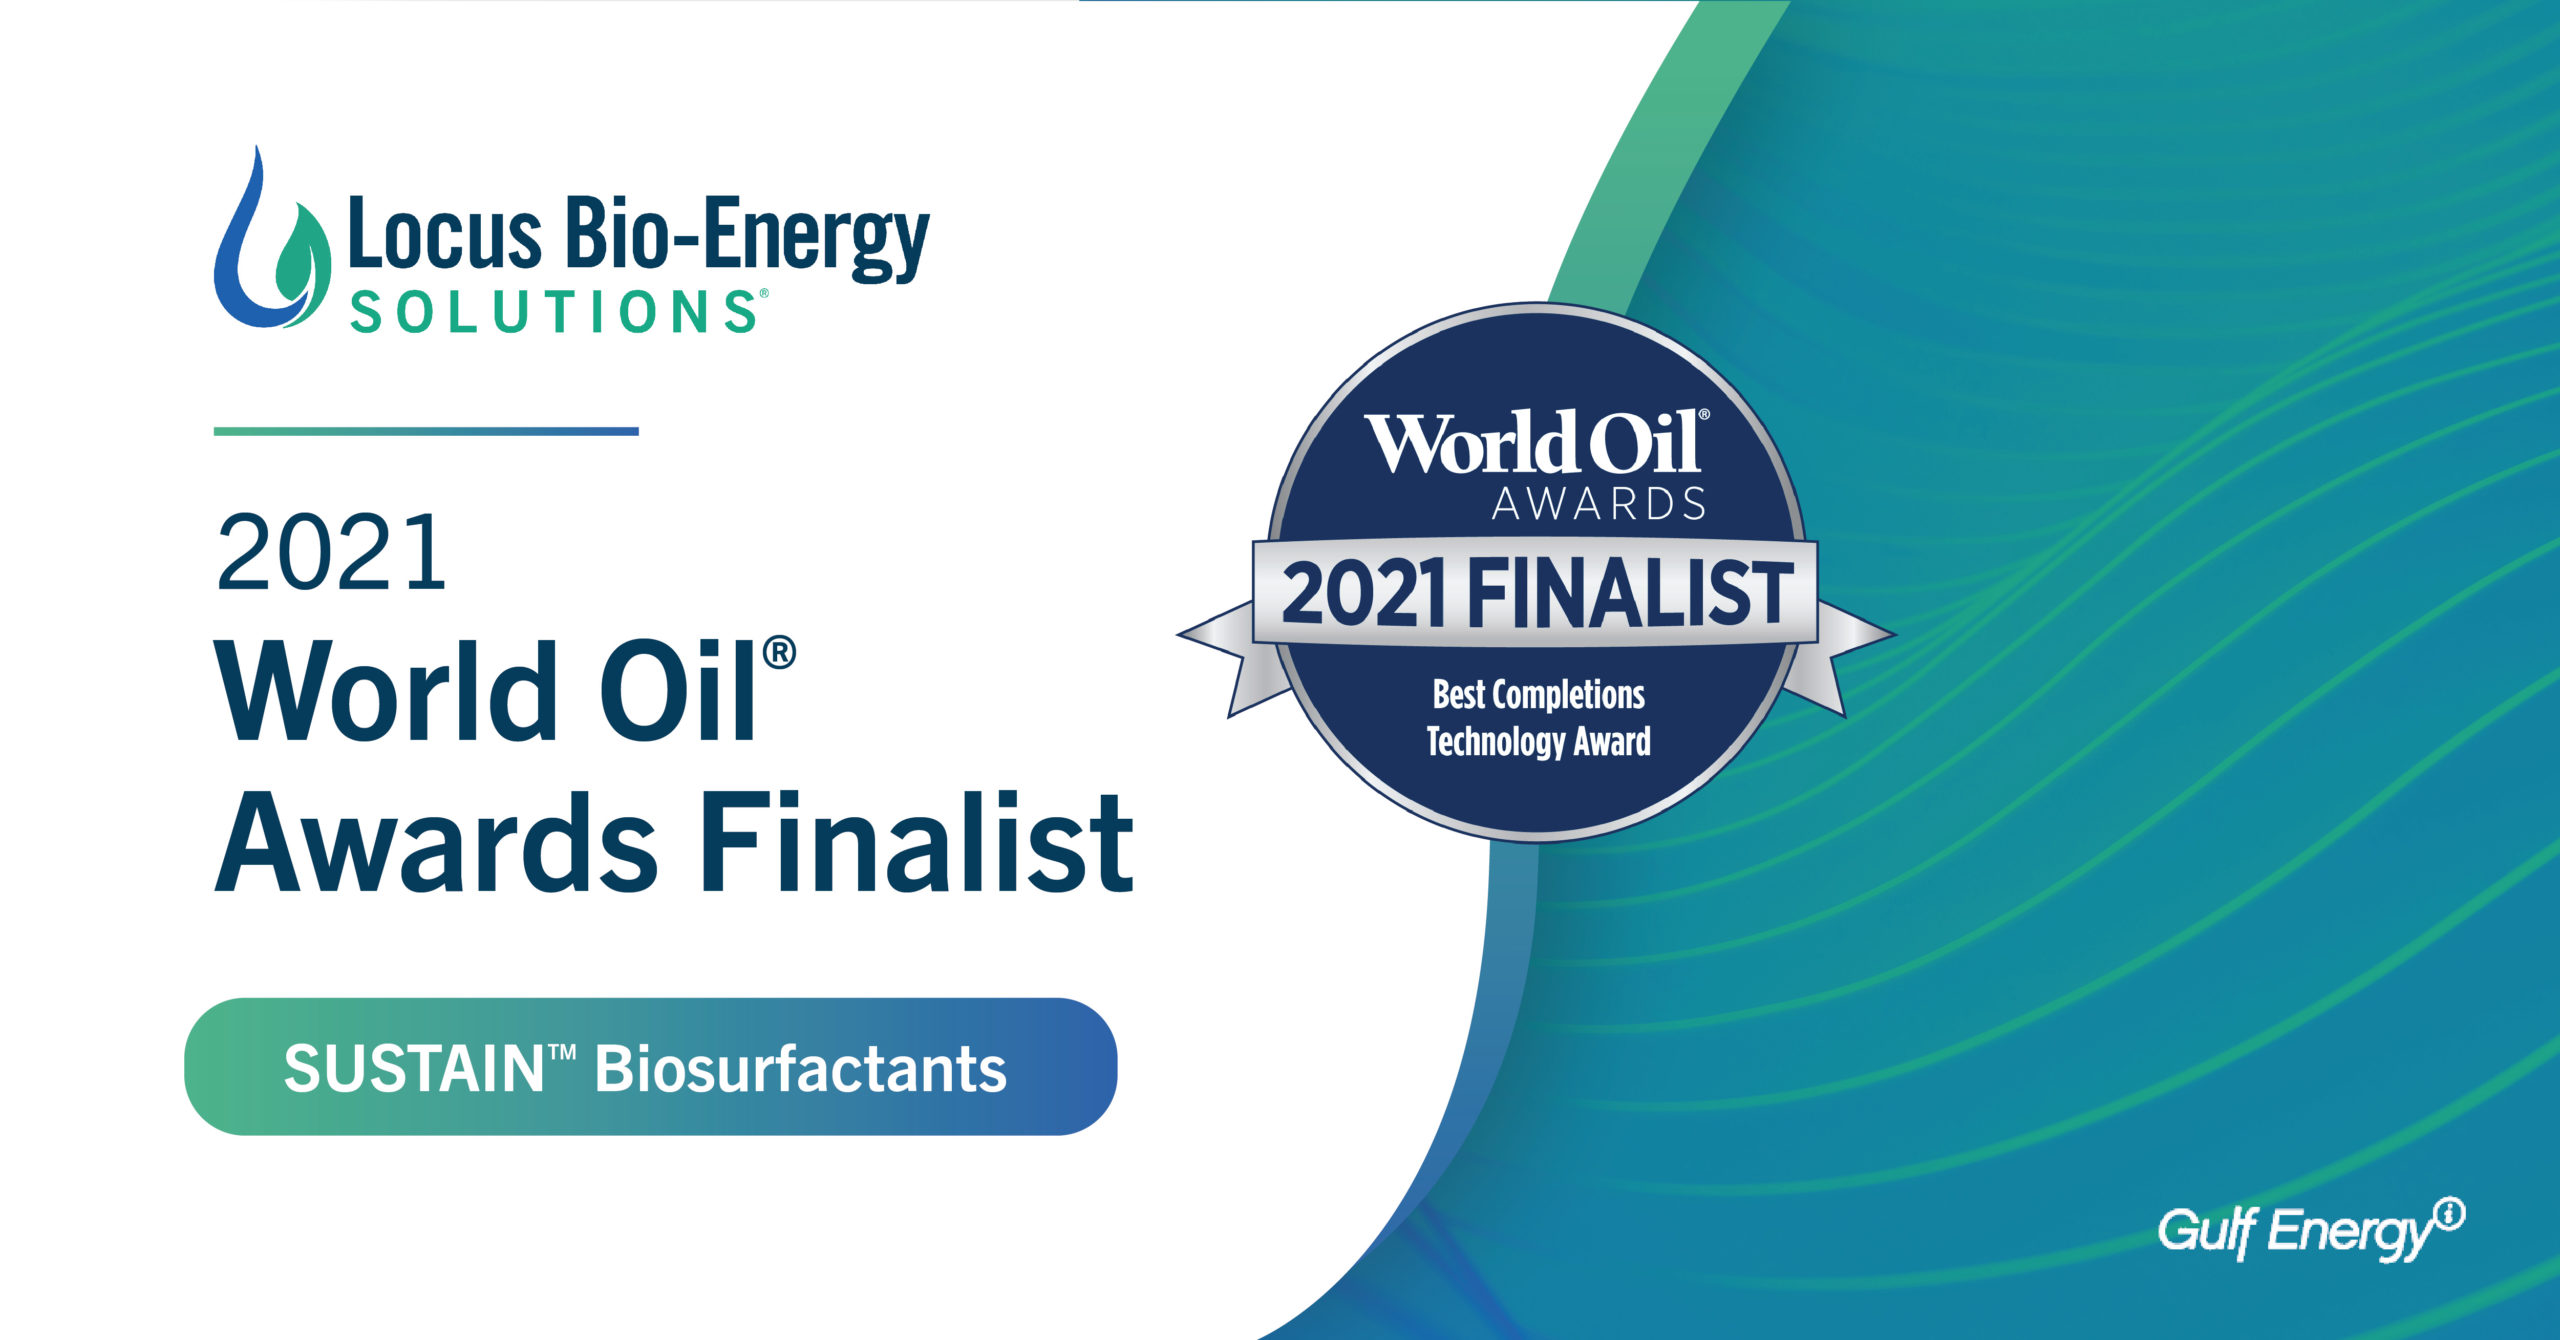 Sustain biosurfactants world oil award completion technology finalist